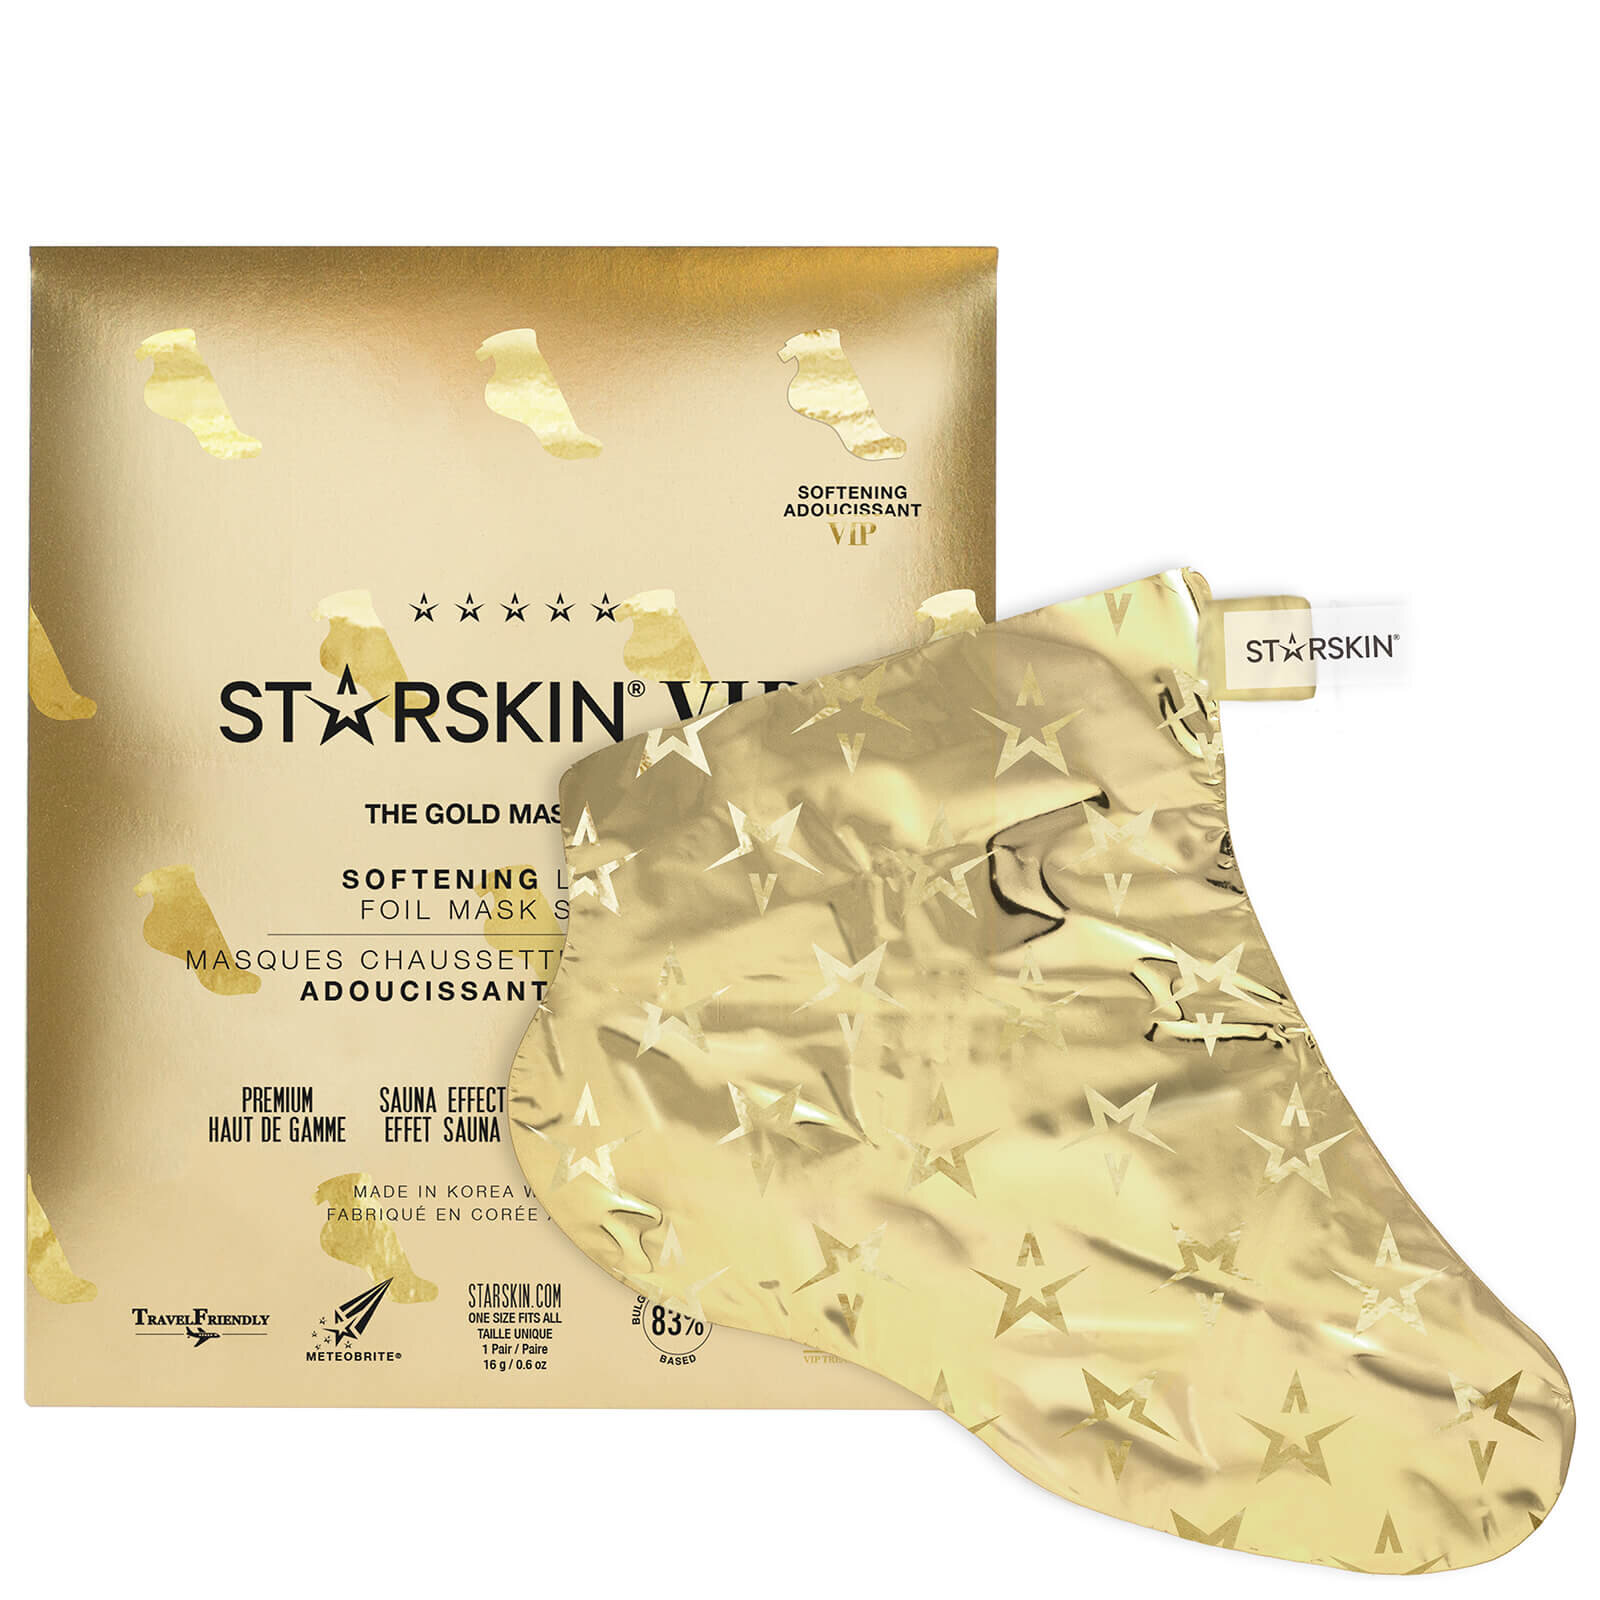 Starskin VIP The Gold Foot Mask, £11.50, Beauty Bay